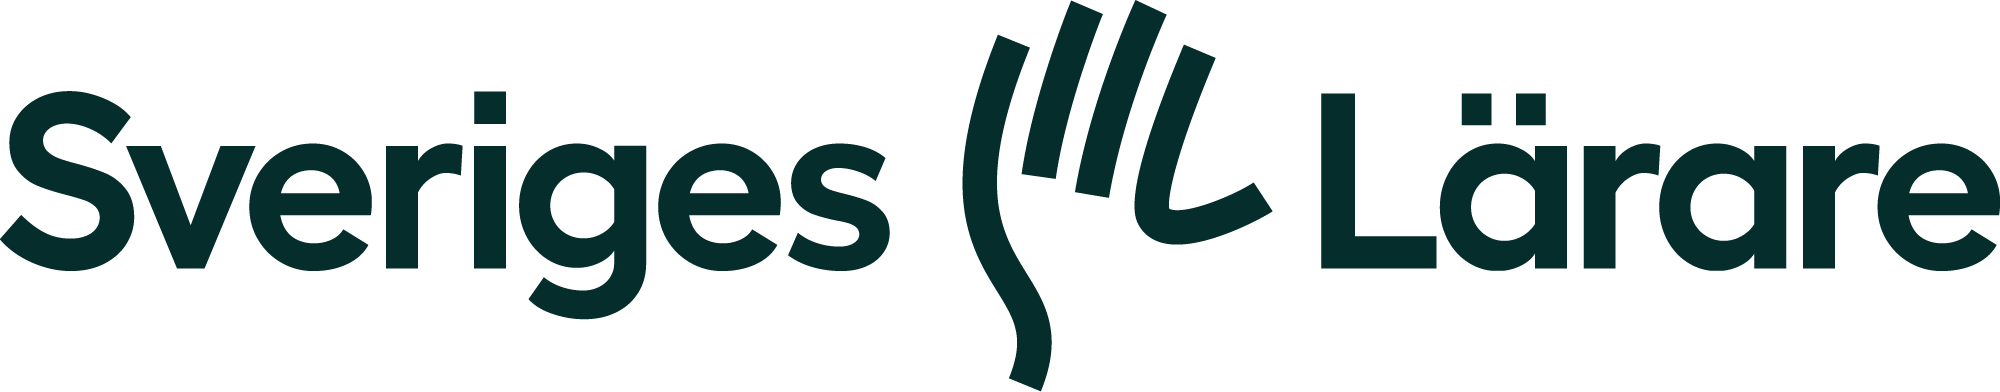 Sveriges Lärare logotyp